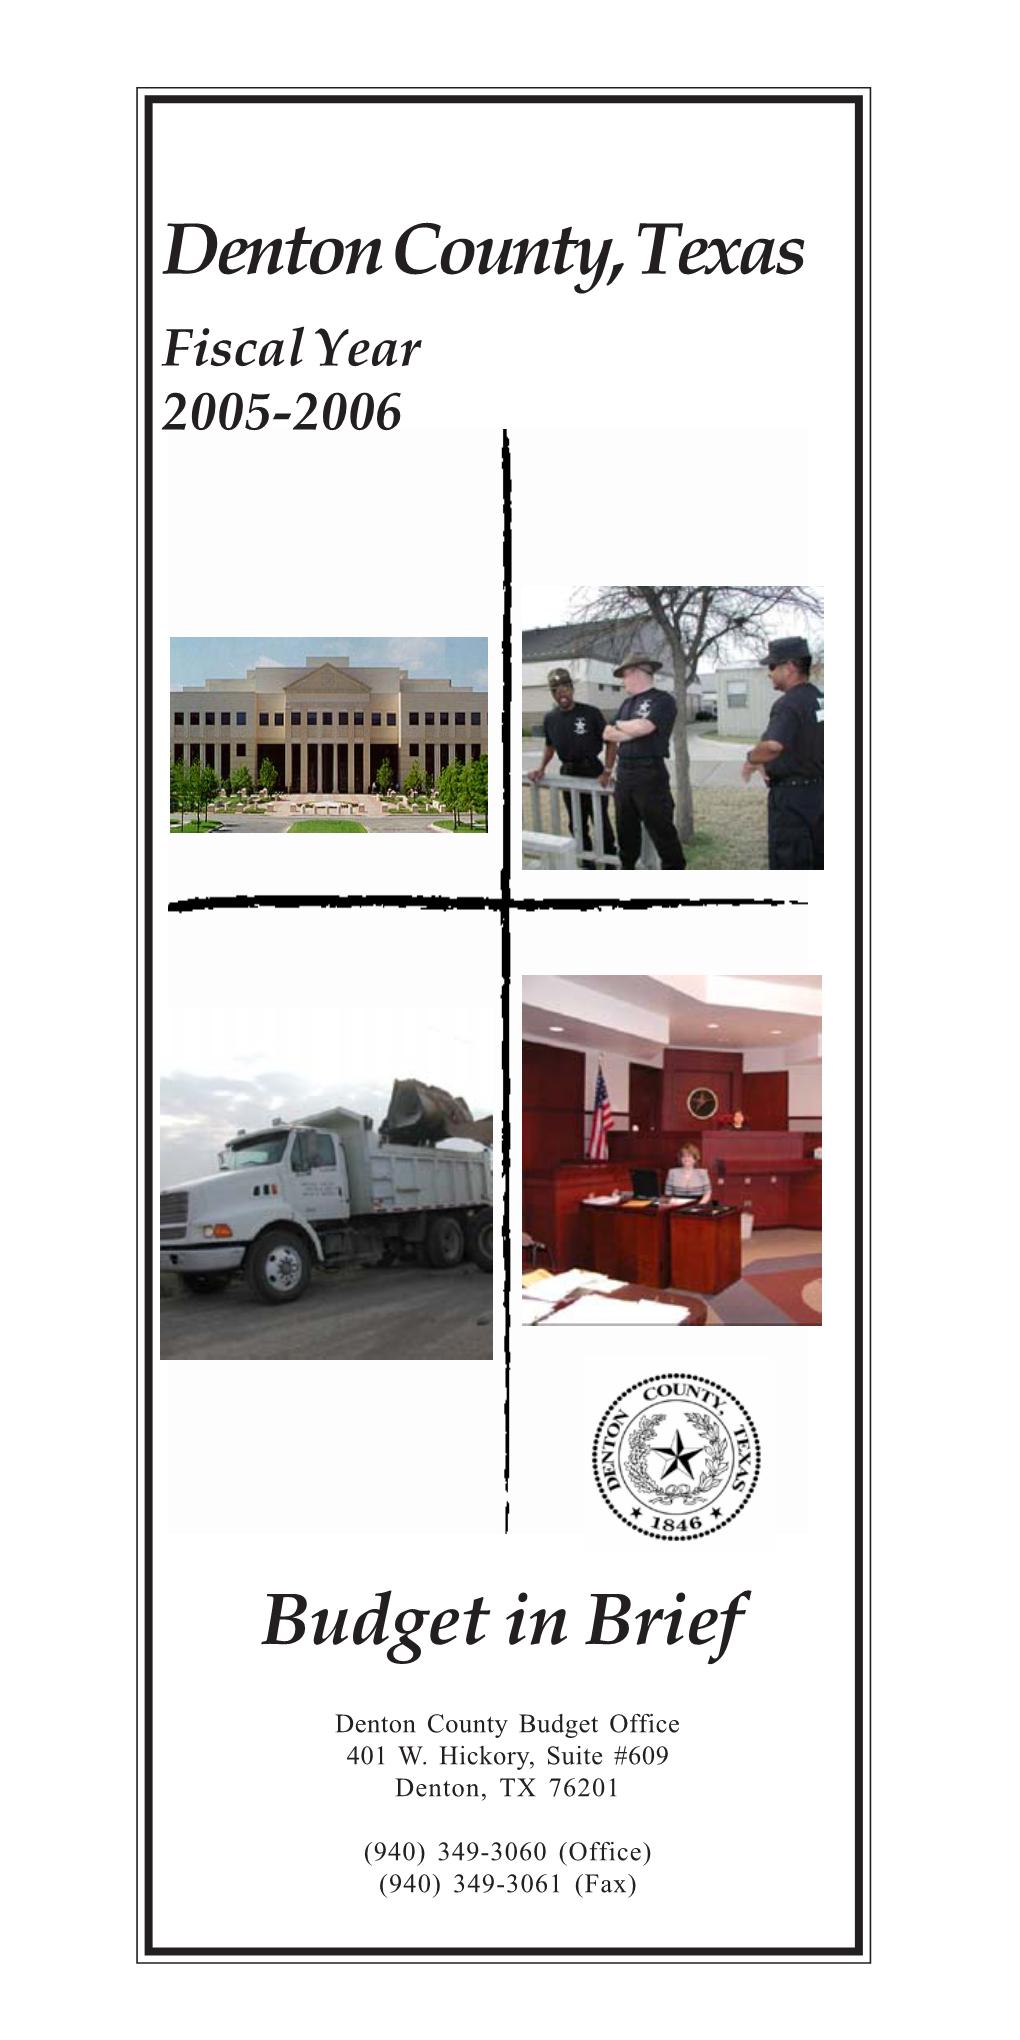 Denton County, Texas Fiscal Year 2005-2006